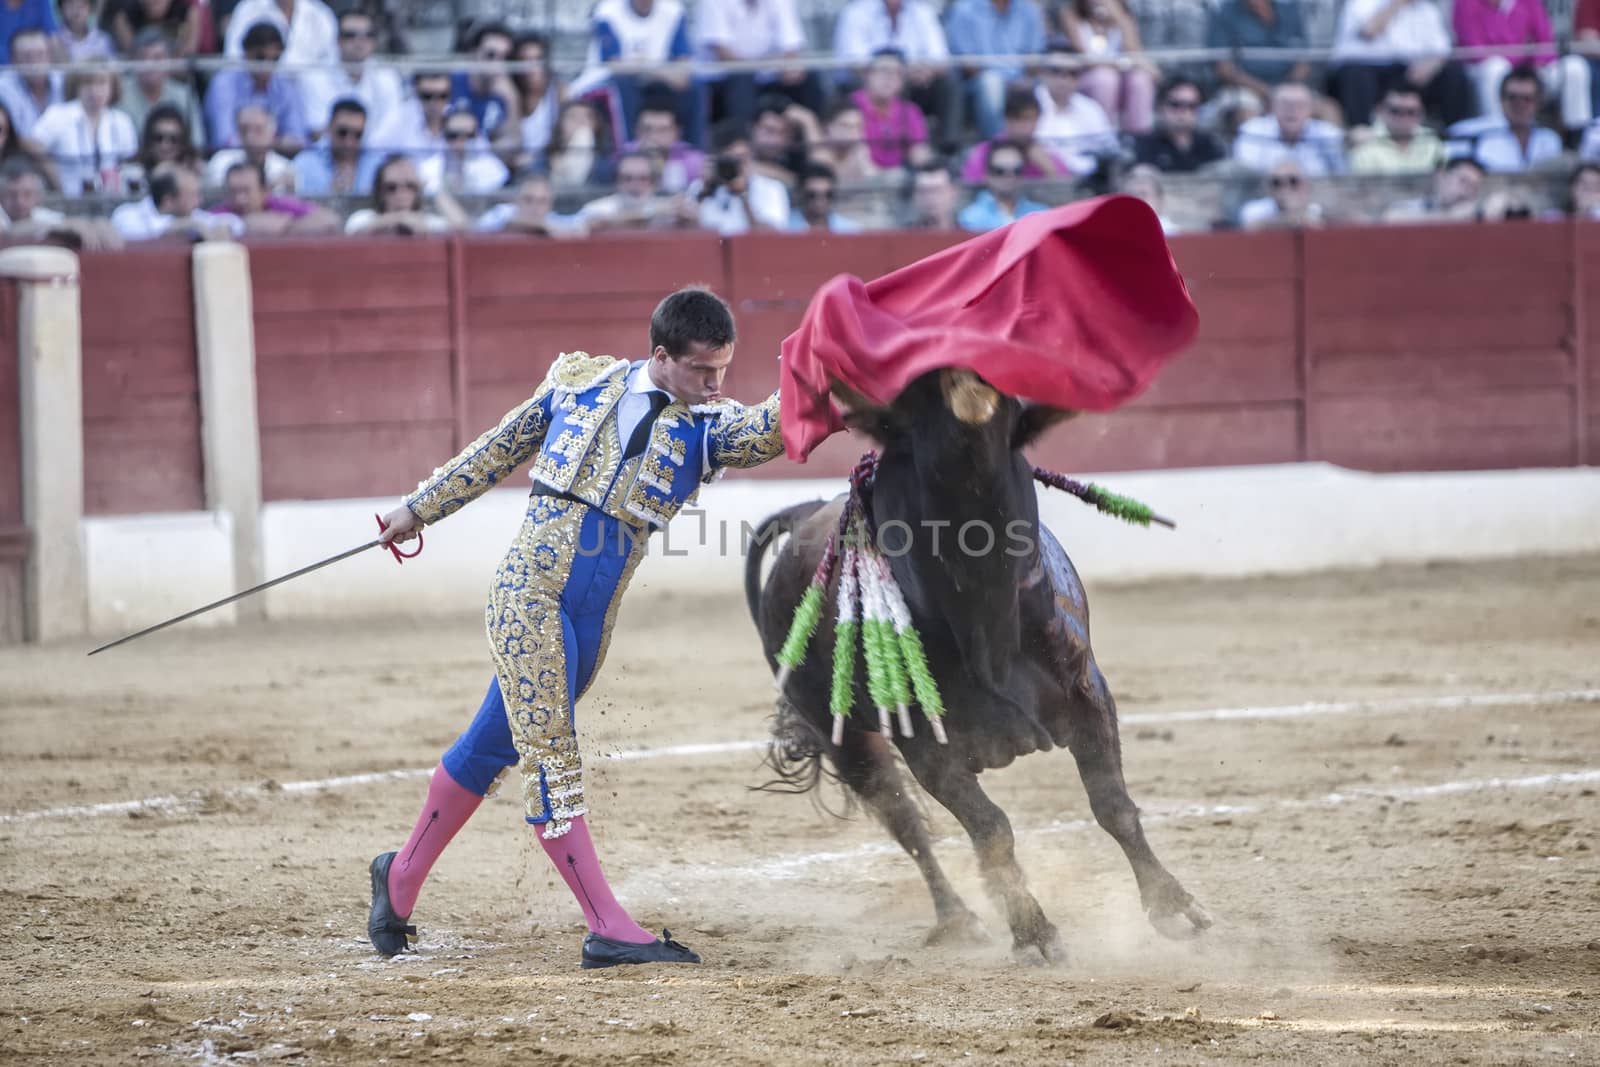 Baeza, Jaen province, SPAIN - 15 august 2009: Bullfighter Julian Lopez El Juli bullfighting with a crutch in a beautiful pass in the Bullring of Baeza, Jaen province, Andalusia, Spain